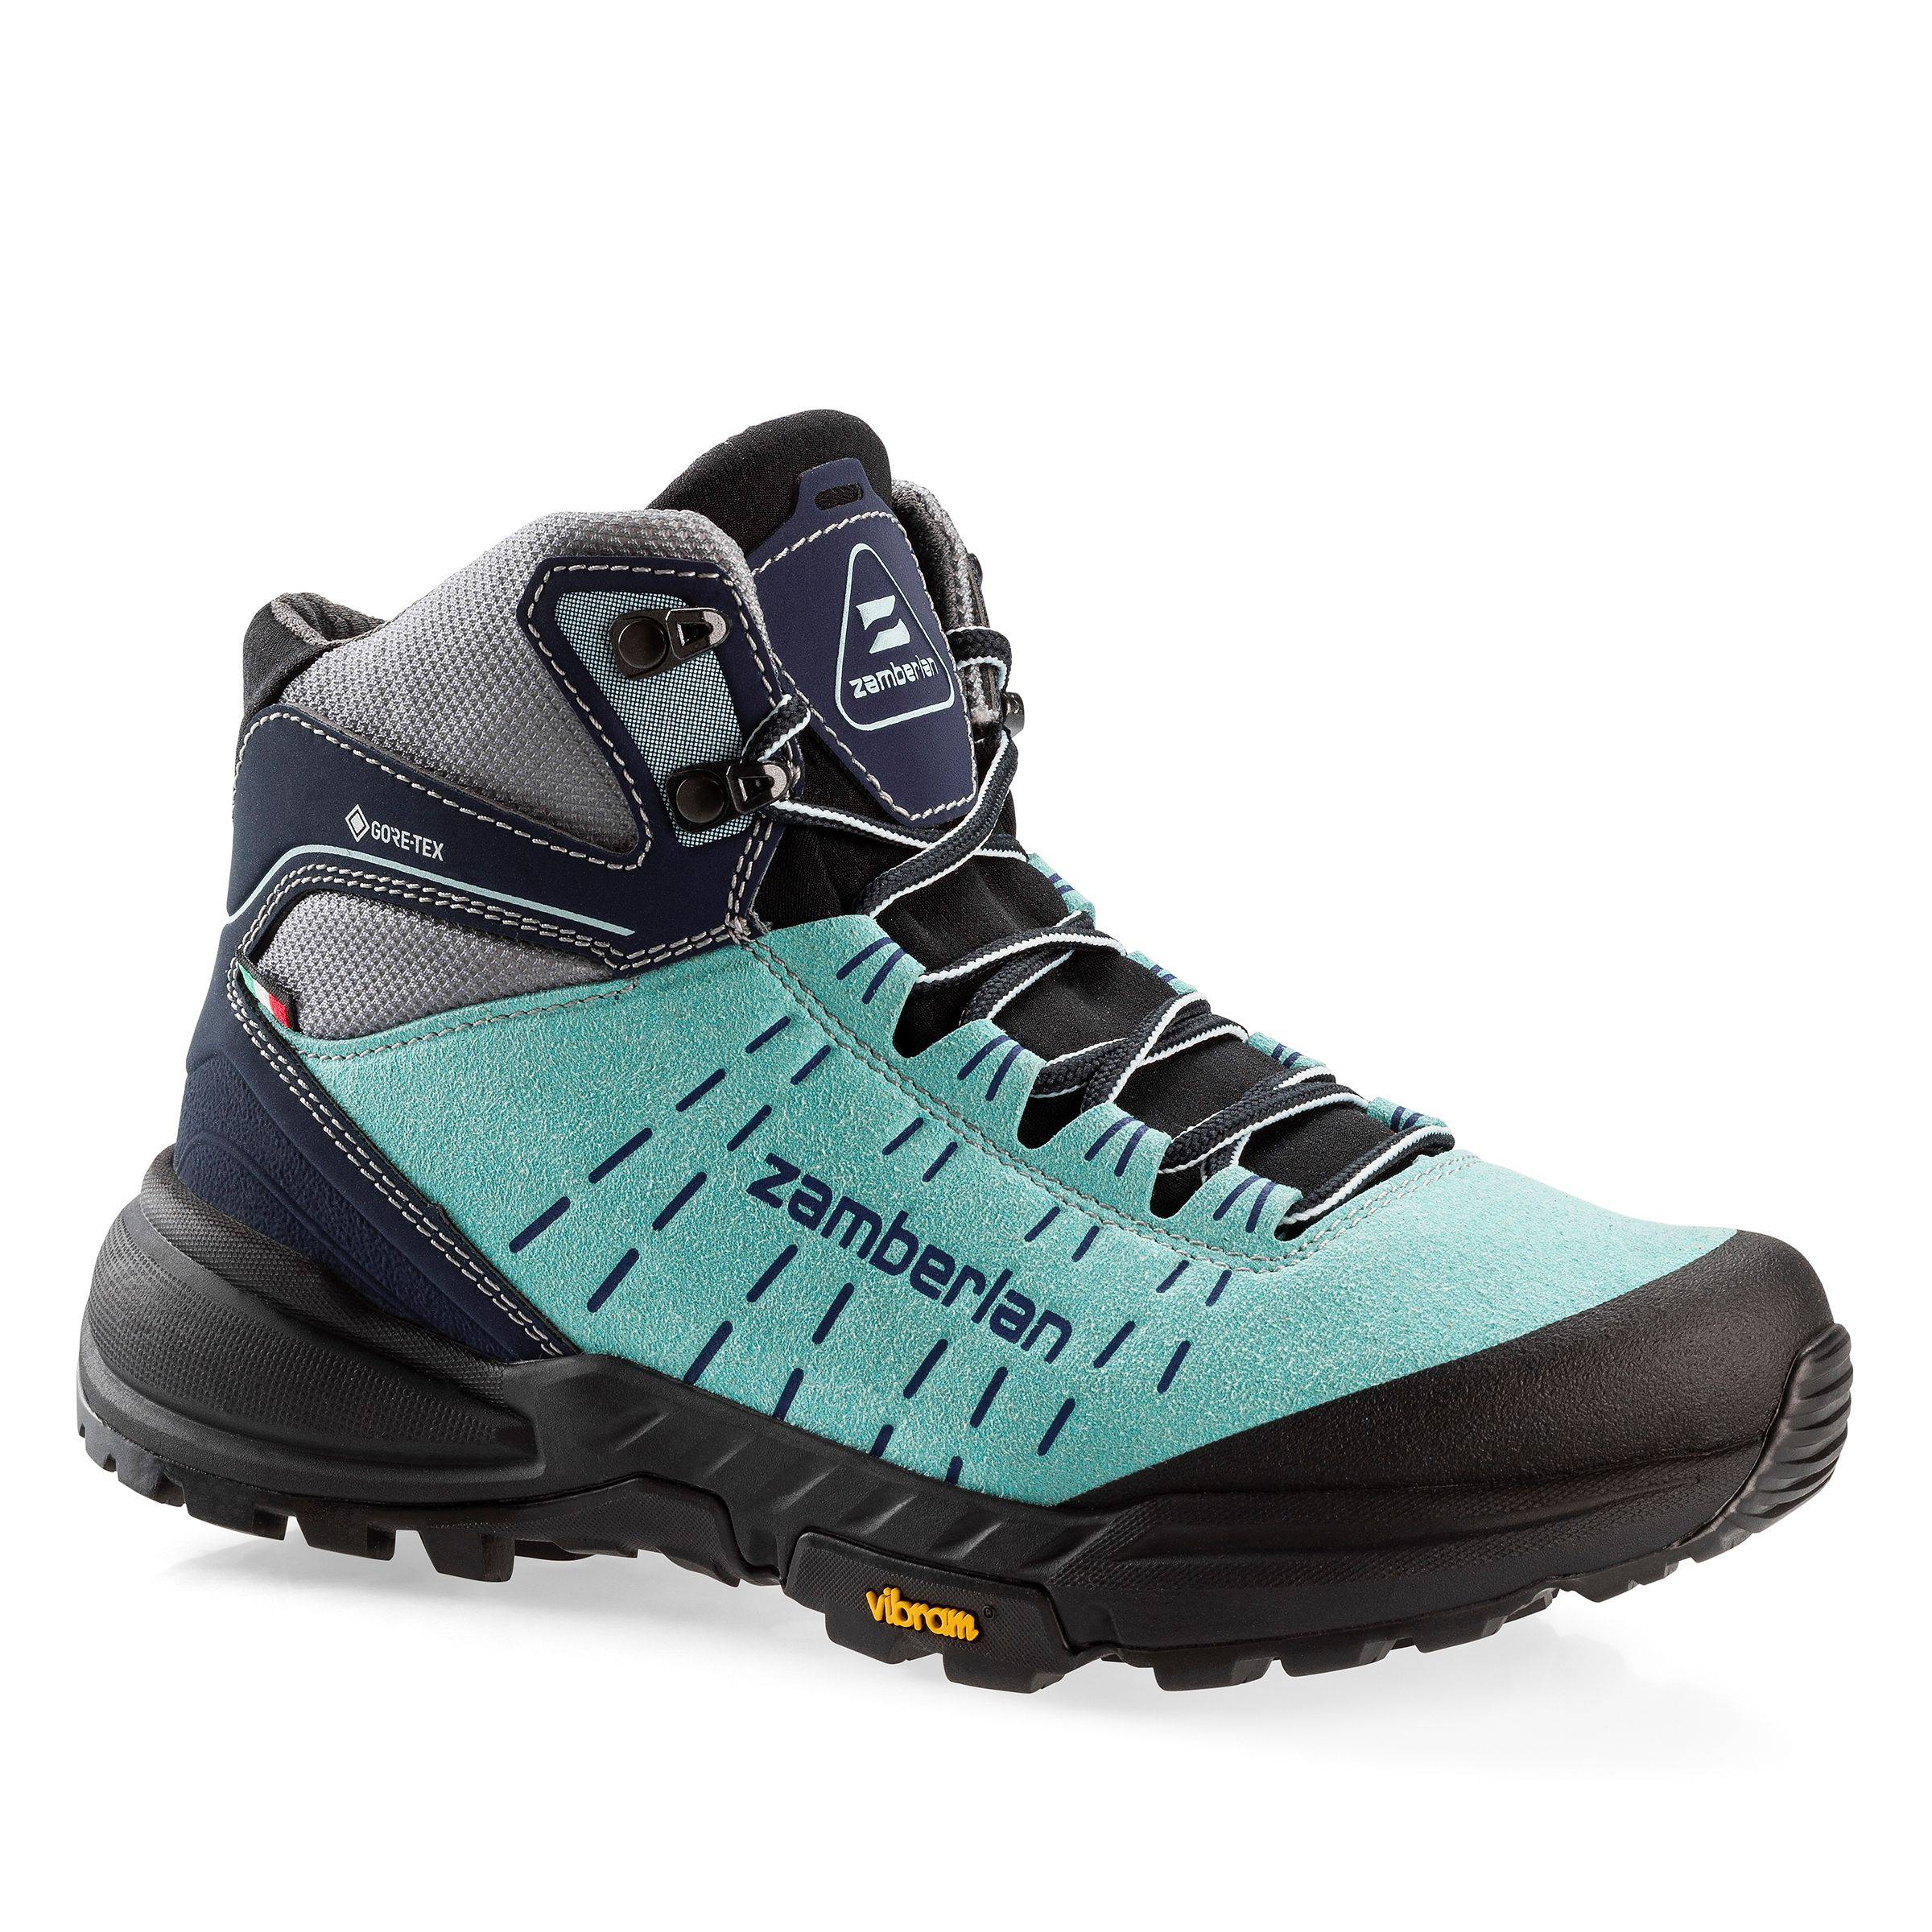 Zamberlan 334 Circe GTX Waterproof Hiking Boots for Ladies - Blue - 6.5M